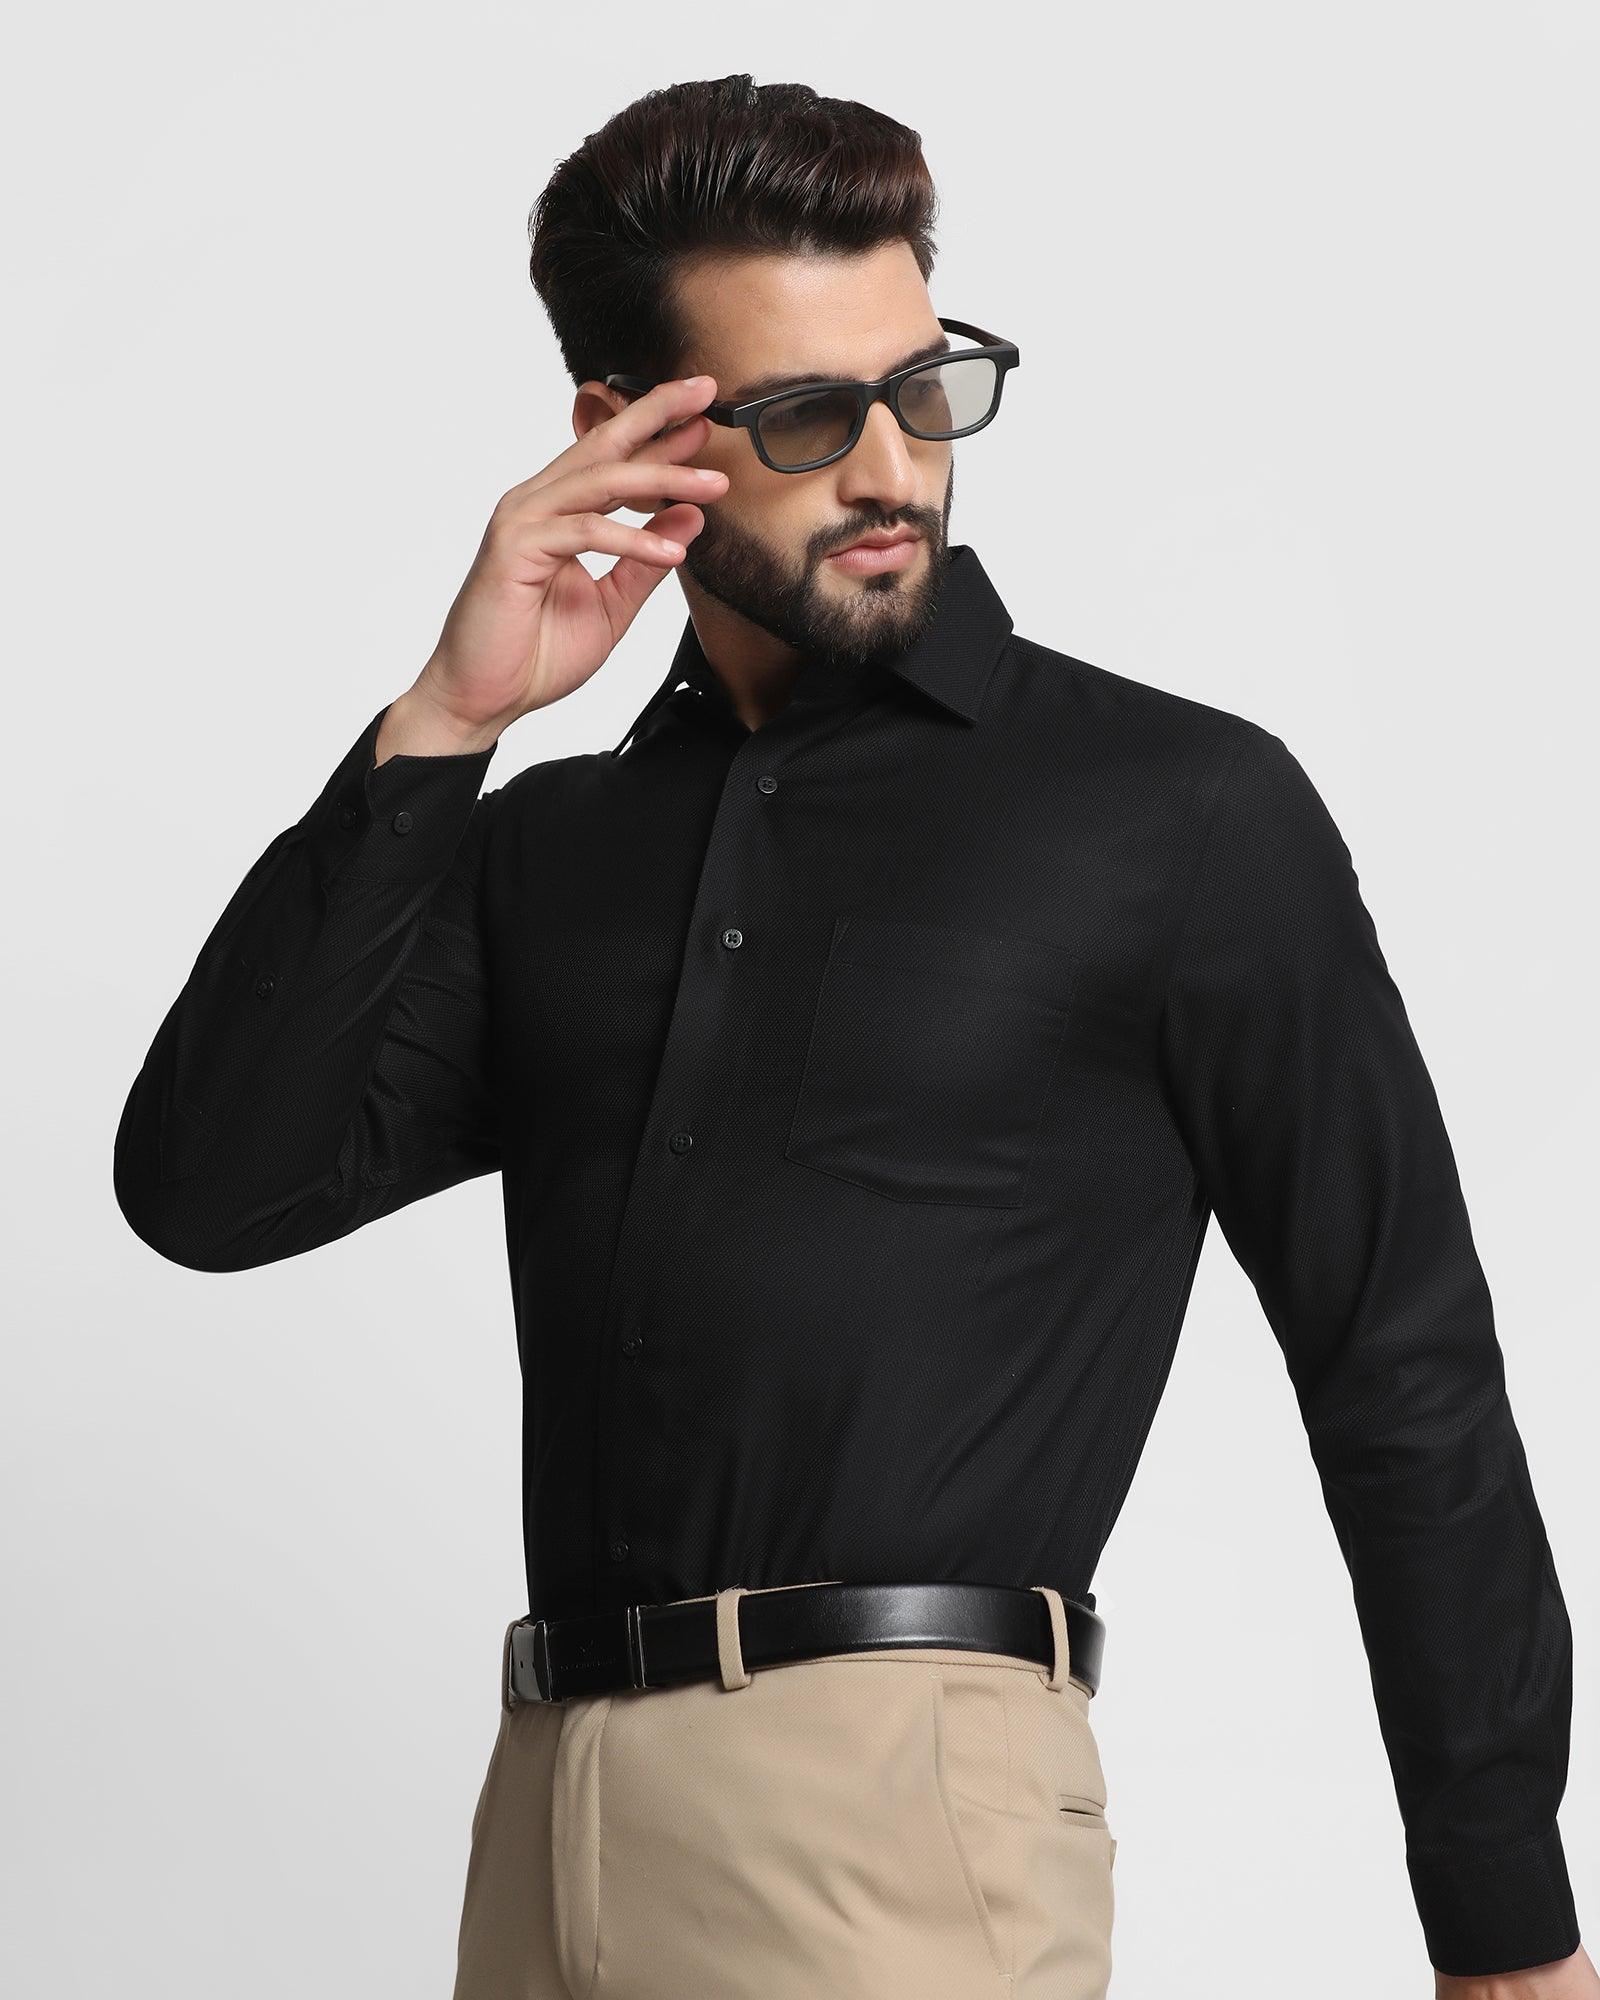 Formal Black Textured Shirt - Blaze